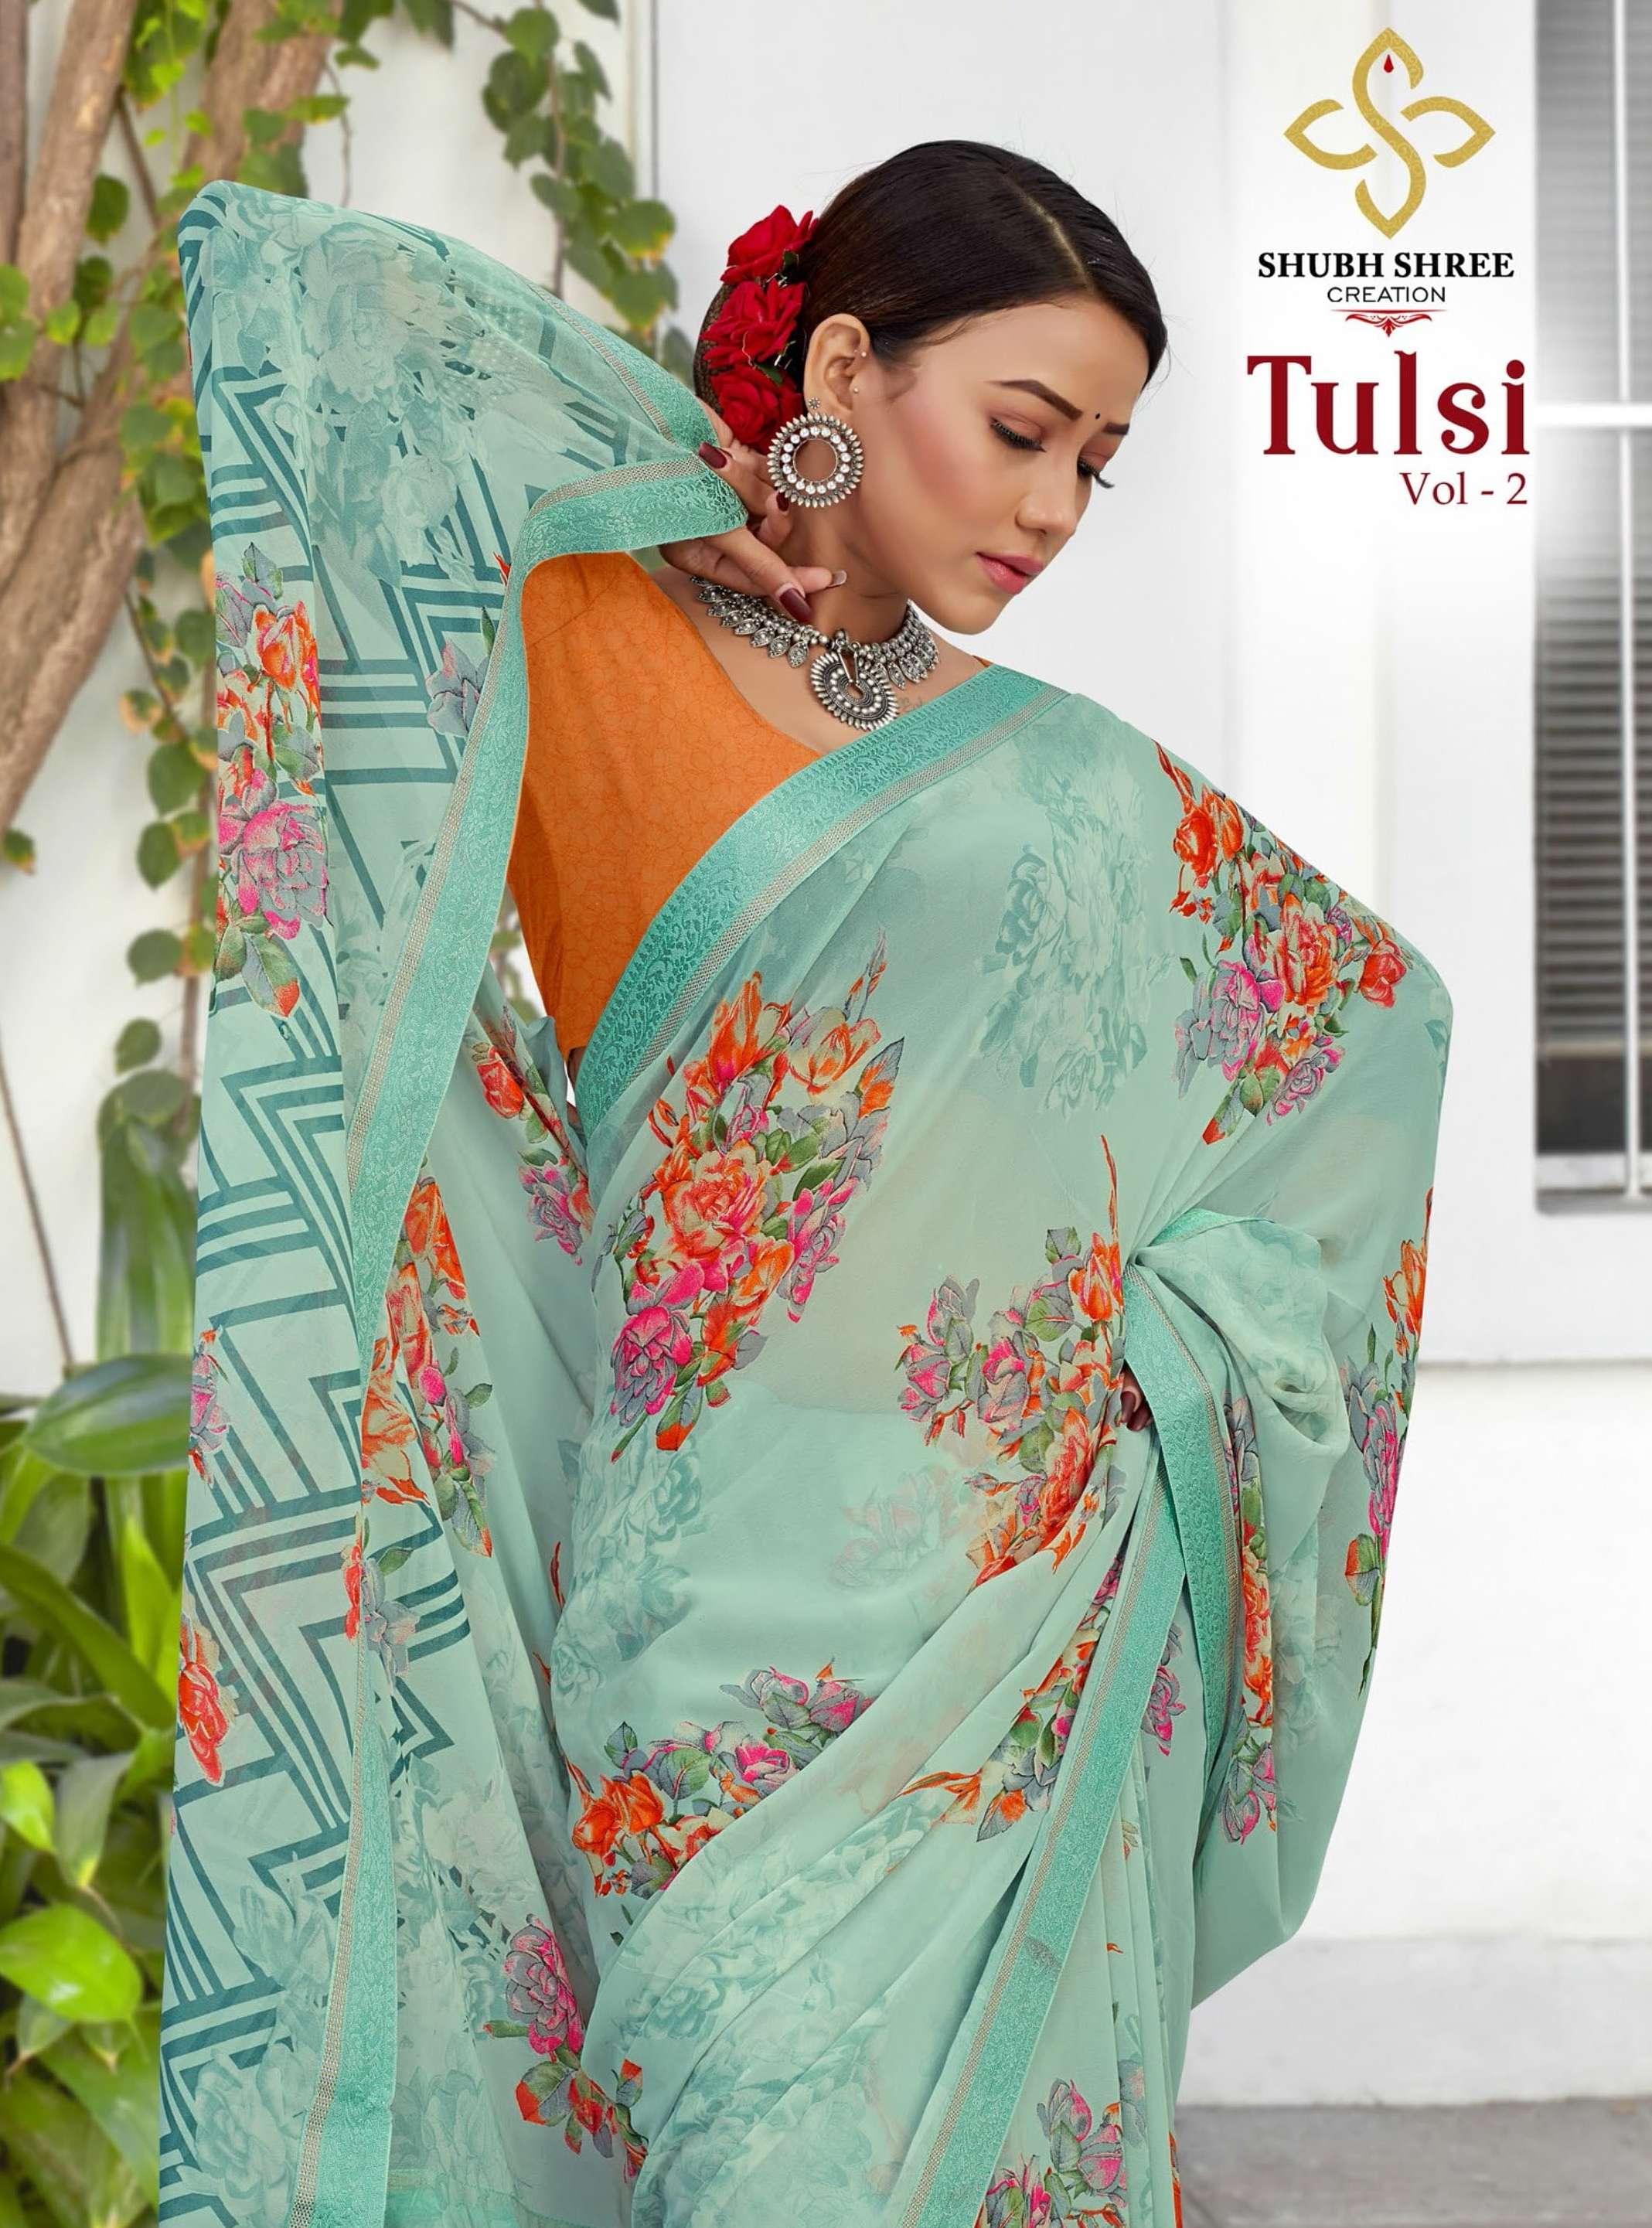 shubh shree tulsi vol 2 beautiful soft printed sarees 